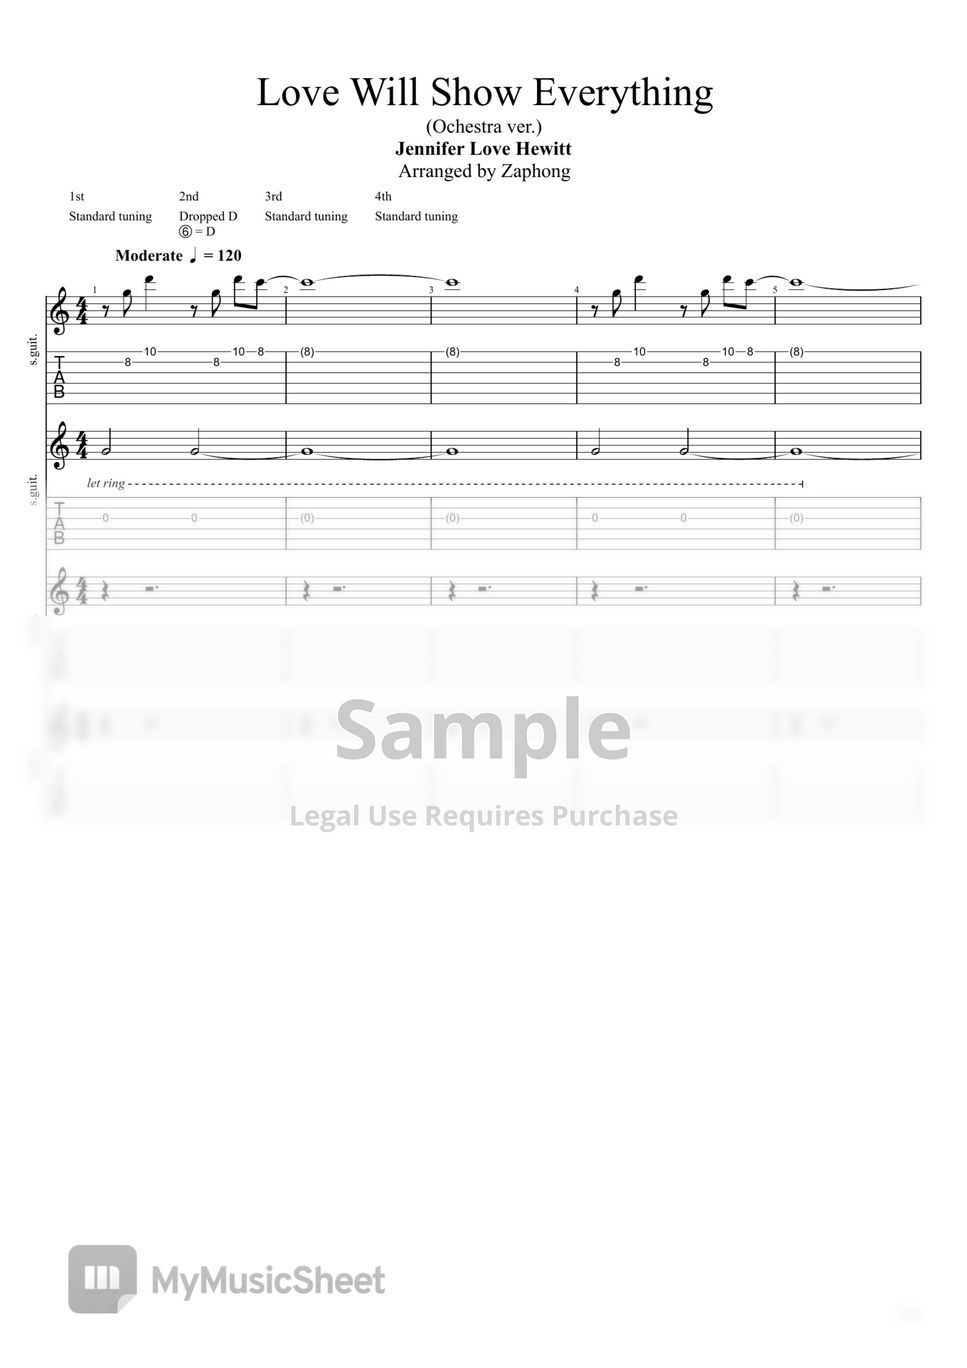 Jennifer Love Hewitt - Love Will Show Everything(If Only OST.) (Ochestra Version(Quartet)) by Zaphong